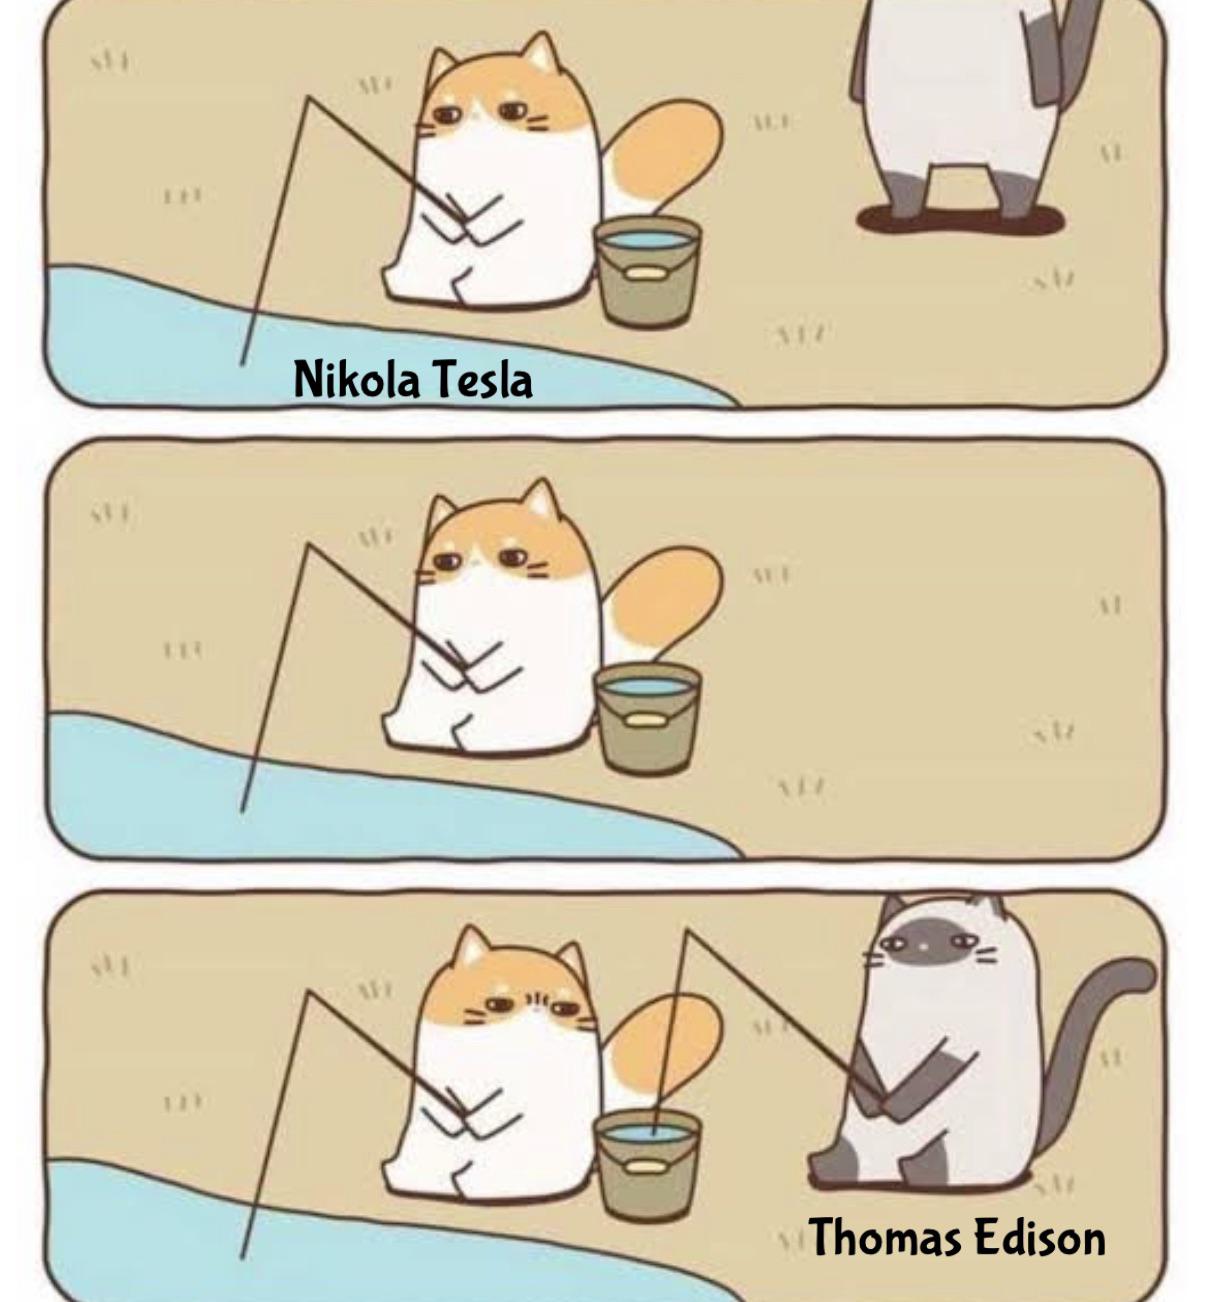 funny memes - dank memes - catfishing meme template - Nikola Tesla 11 11 Thomas Edison